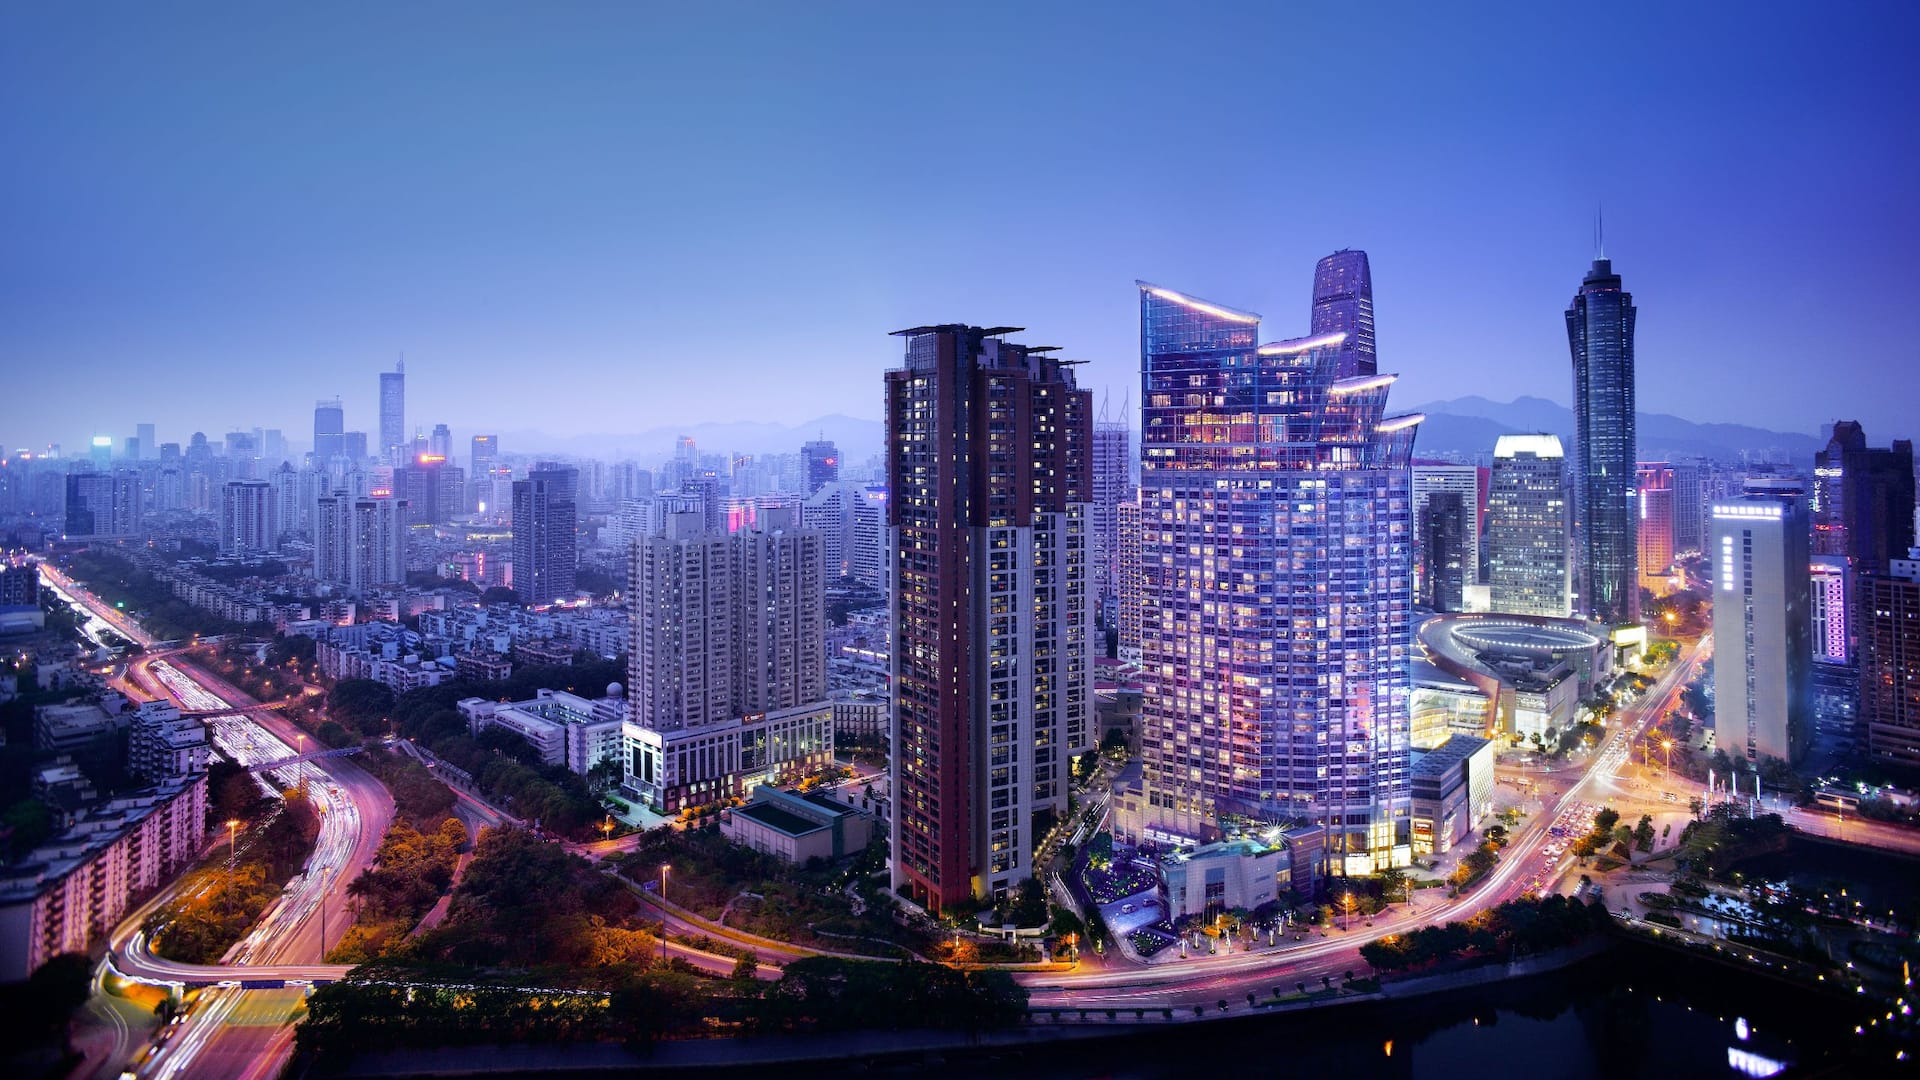 Grand Hyatt Shenzhen Hotel Aerial View at Night